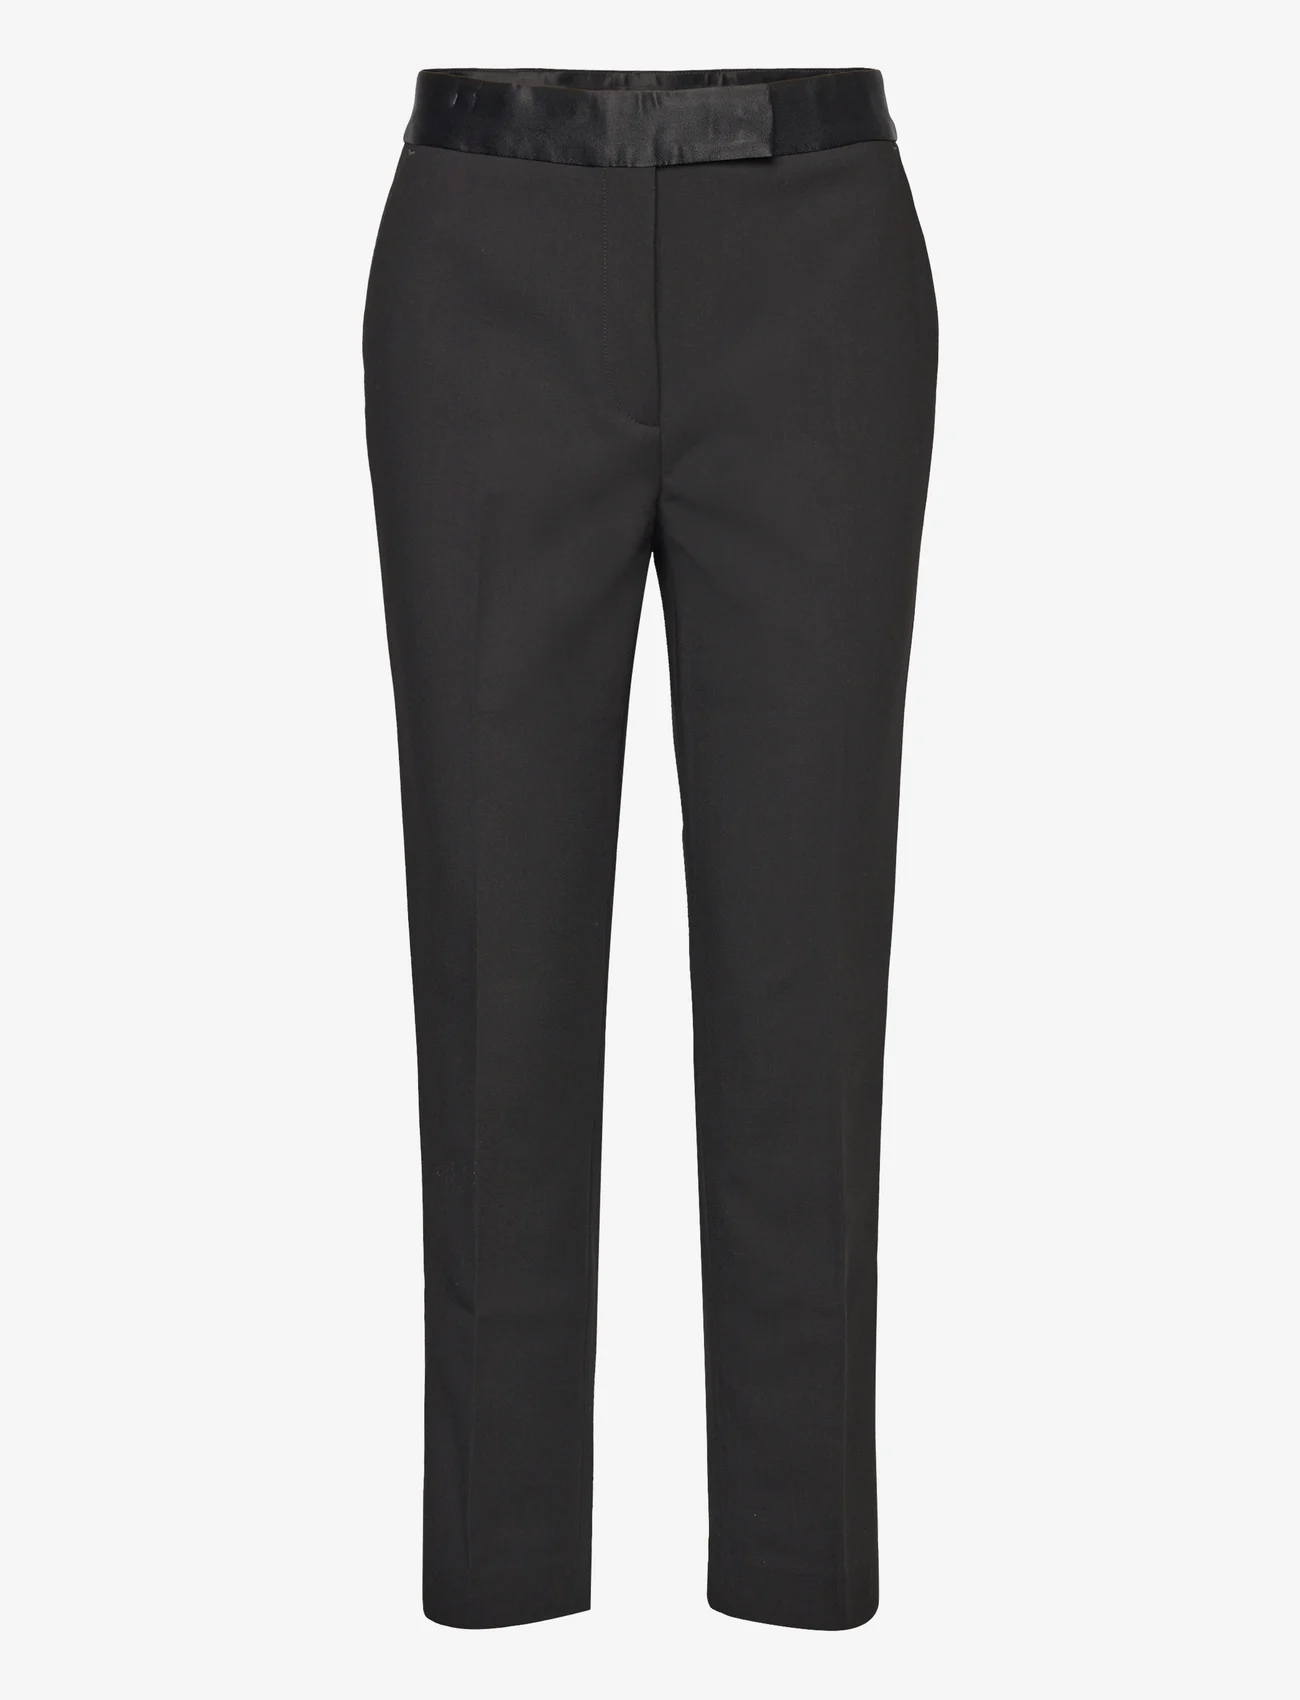 IVY OAK - ANKLE LENGTH PANTS - slim fit trousers - black - 0